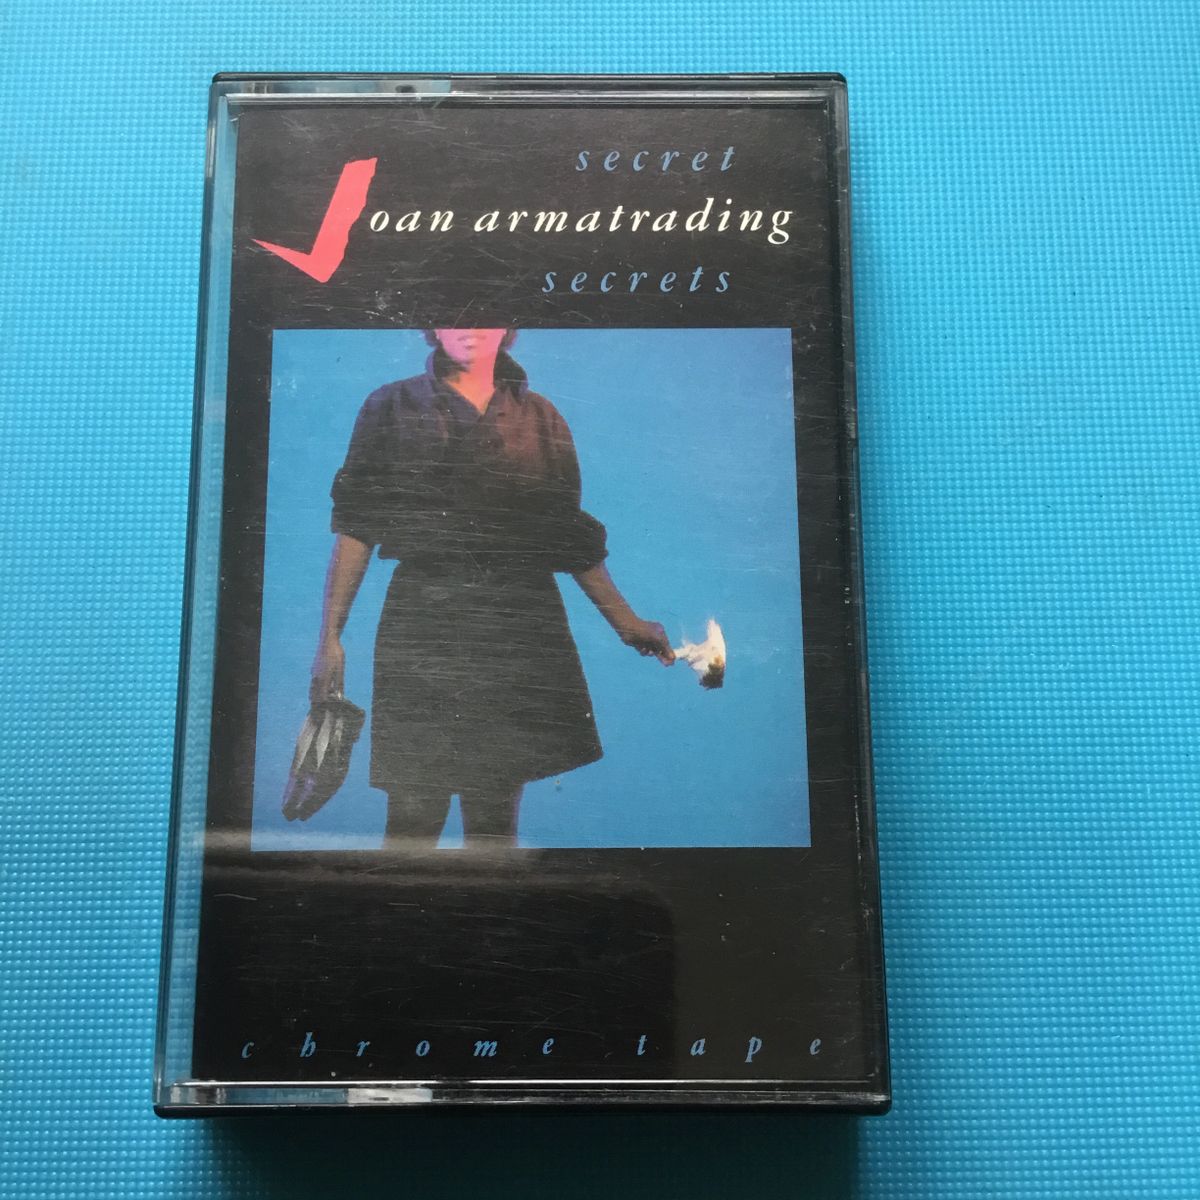 JOAN ARMATRADING - Secret Secrets - Cassette Album